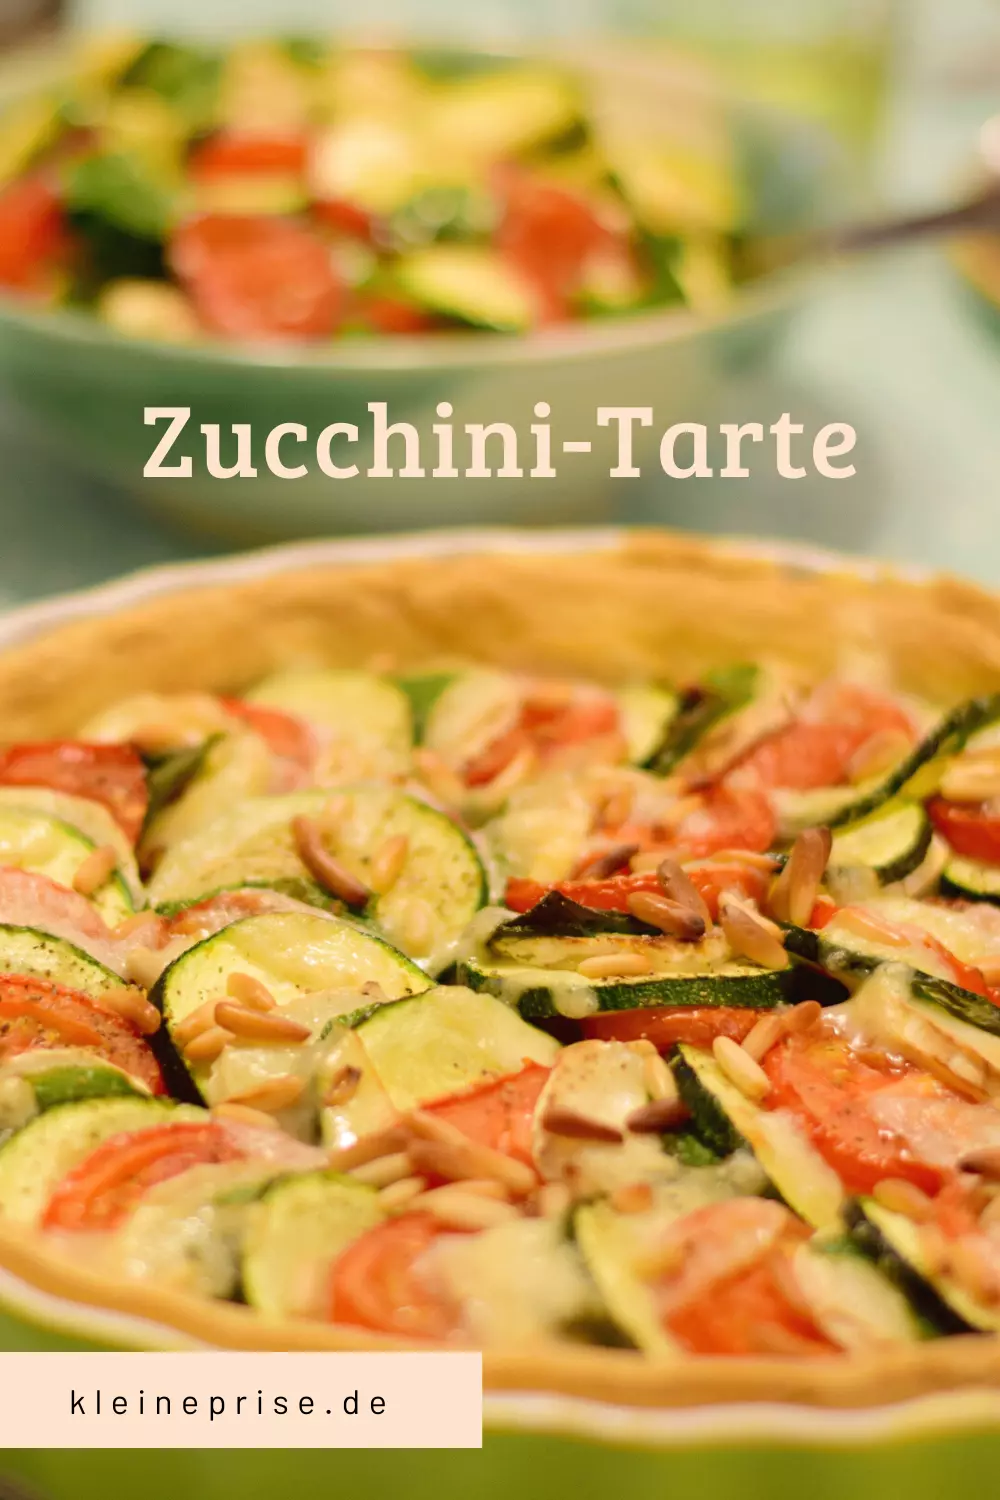 Pin es bei Pinterest: Zucchini-Tarte